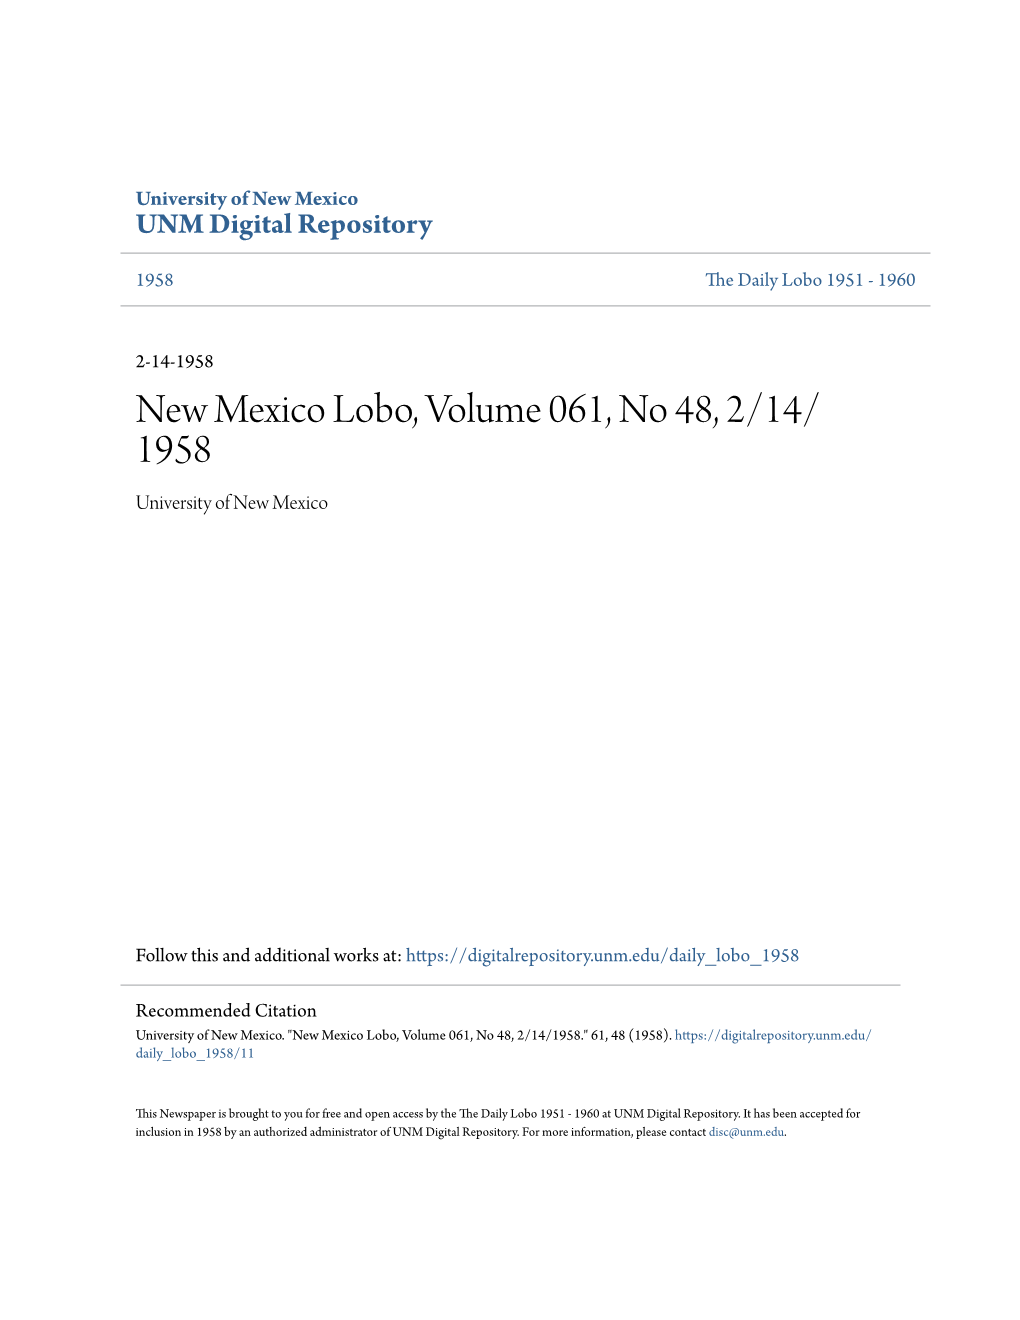 New Mexico Lobo, Volume 061, No 48, 2/14/1958." 61, 48 (1958)